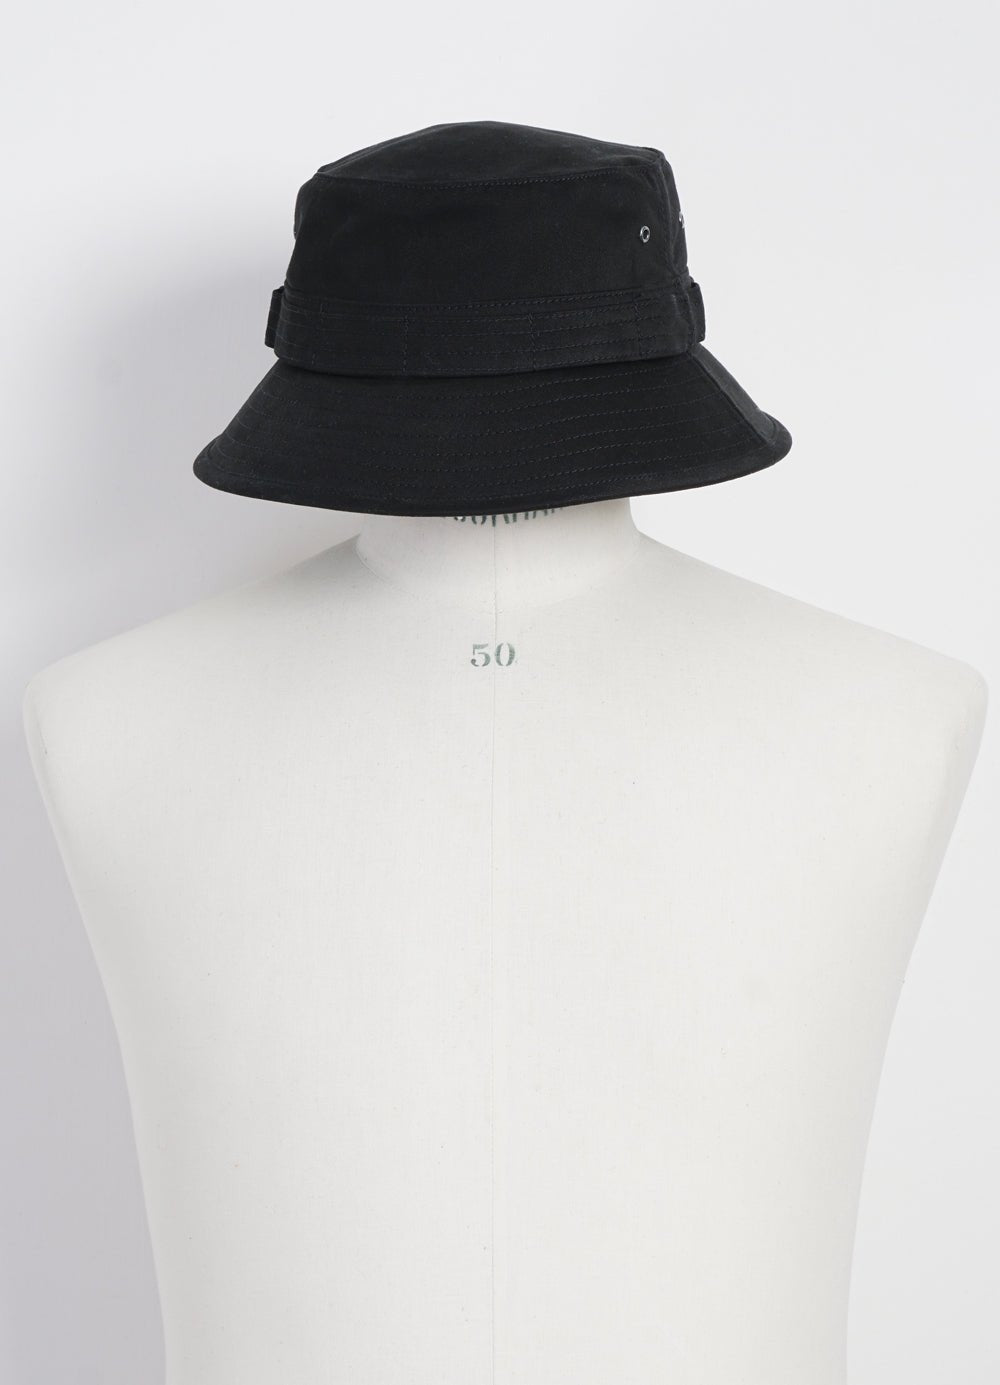 HANSEN GARMENTS - EDVARD | Bucket Hat | Black - HANSEN Garments